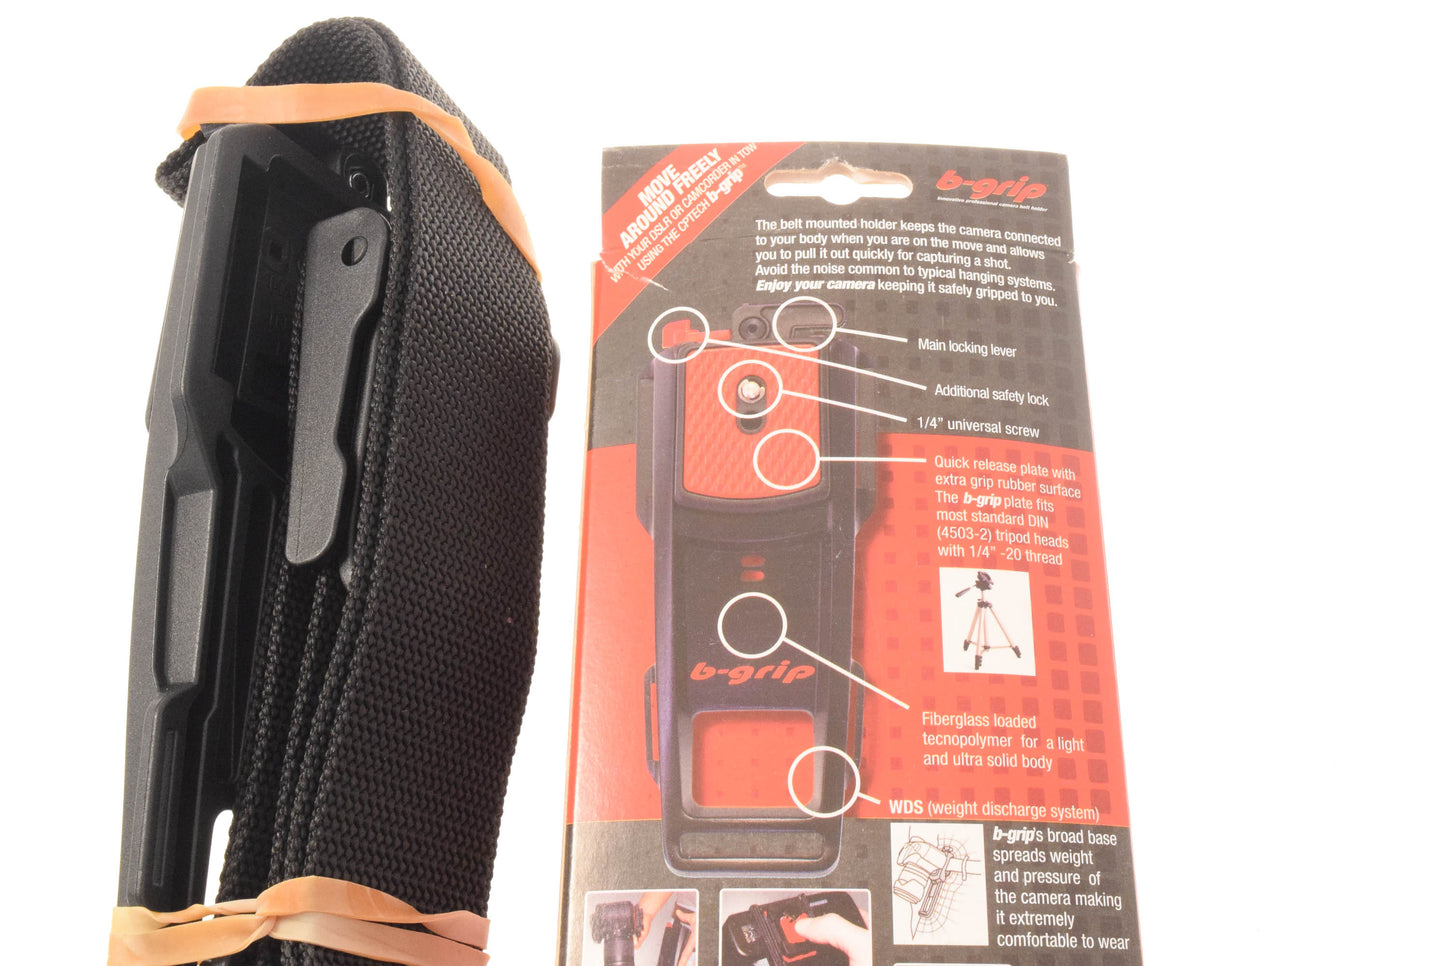 Generic B-grip Camera Belt Holder